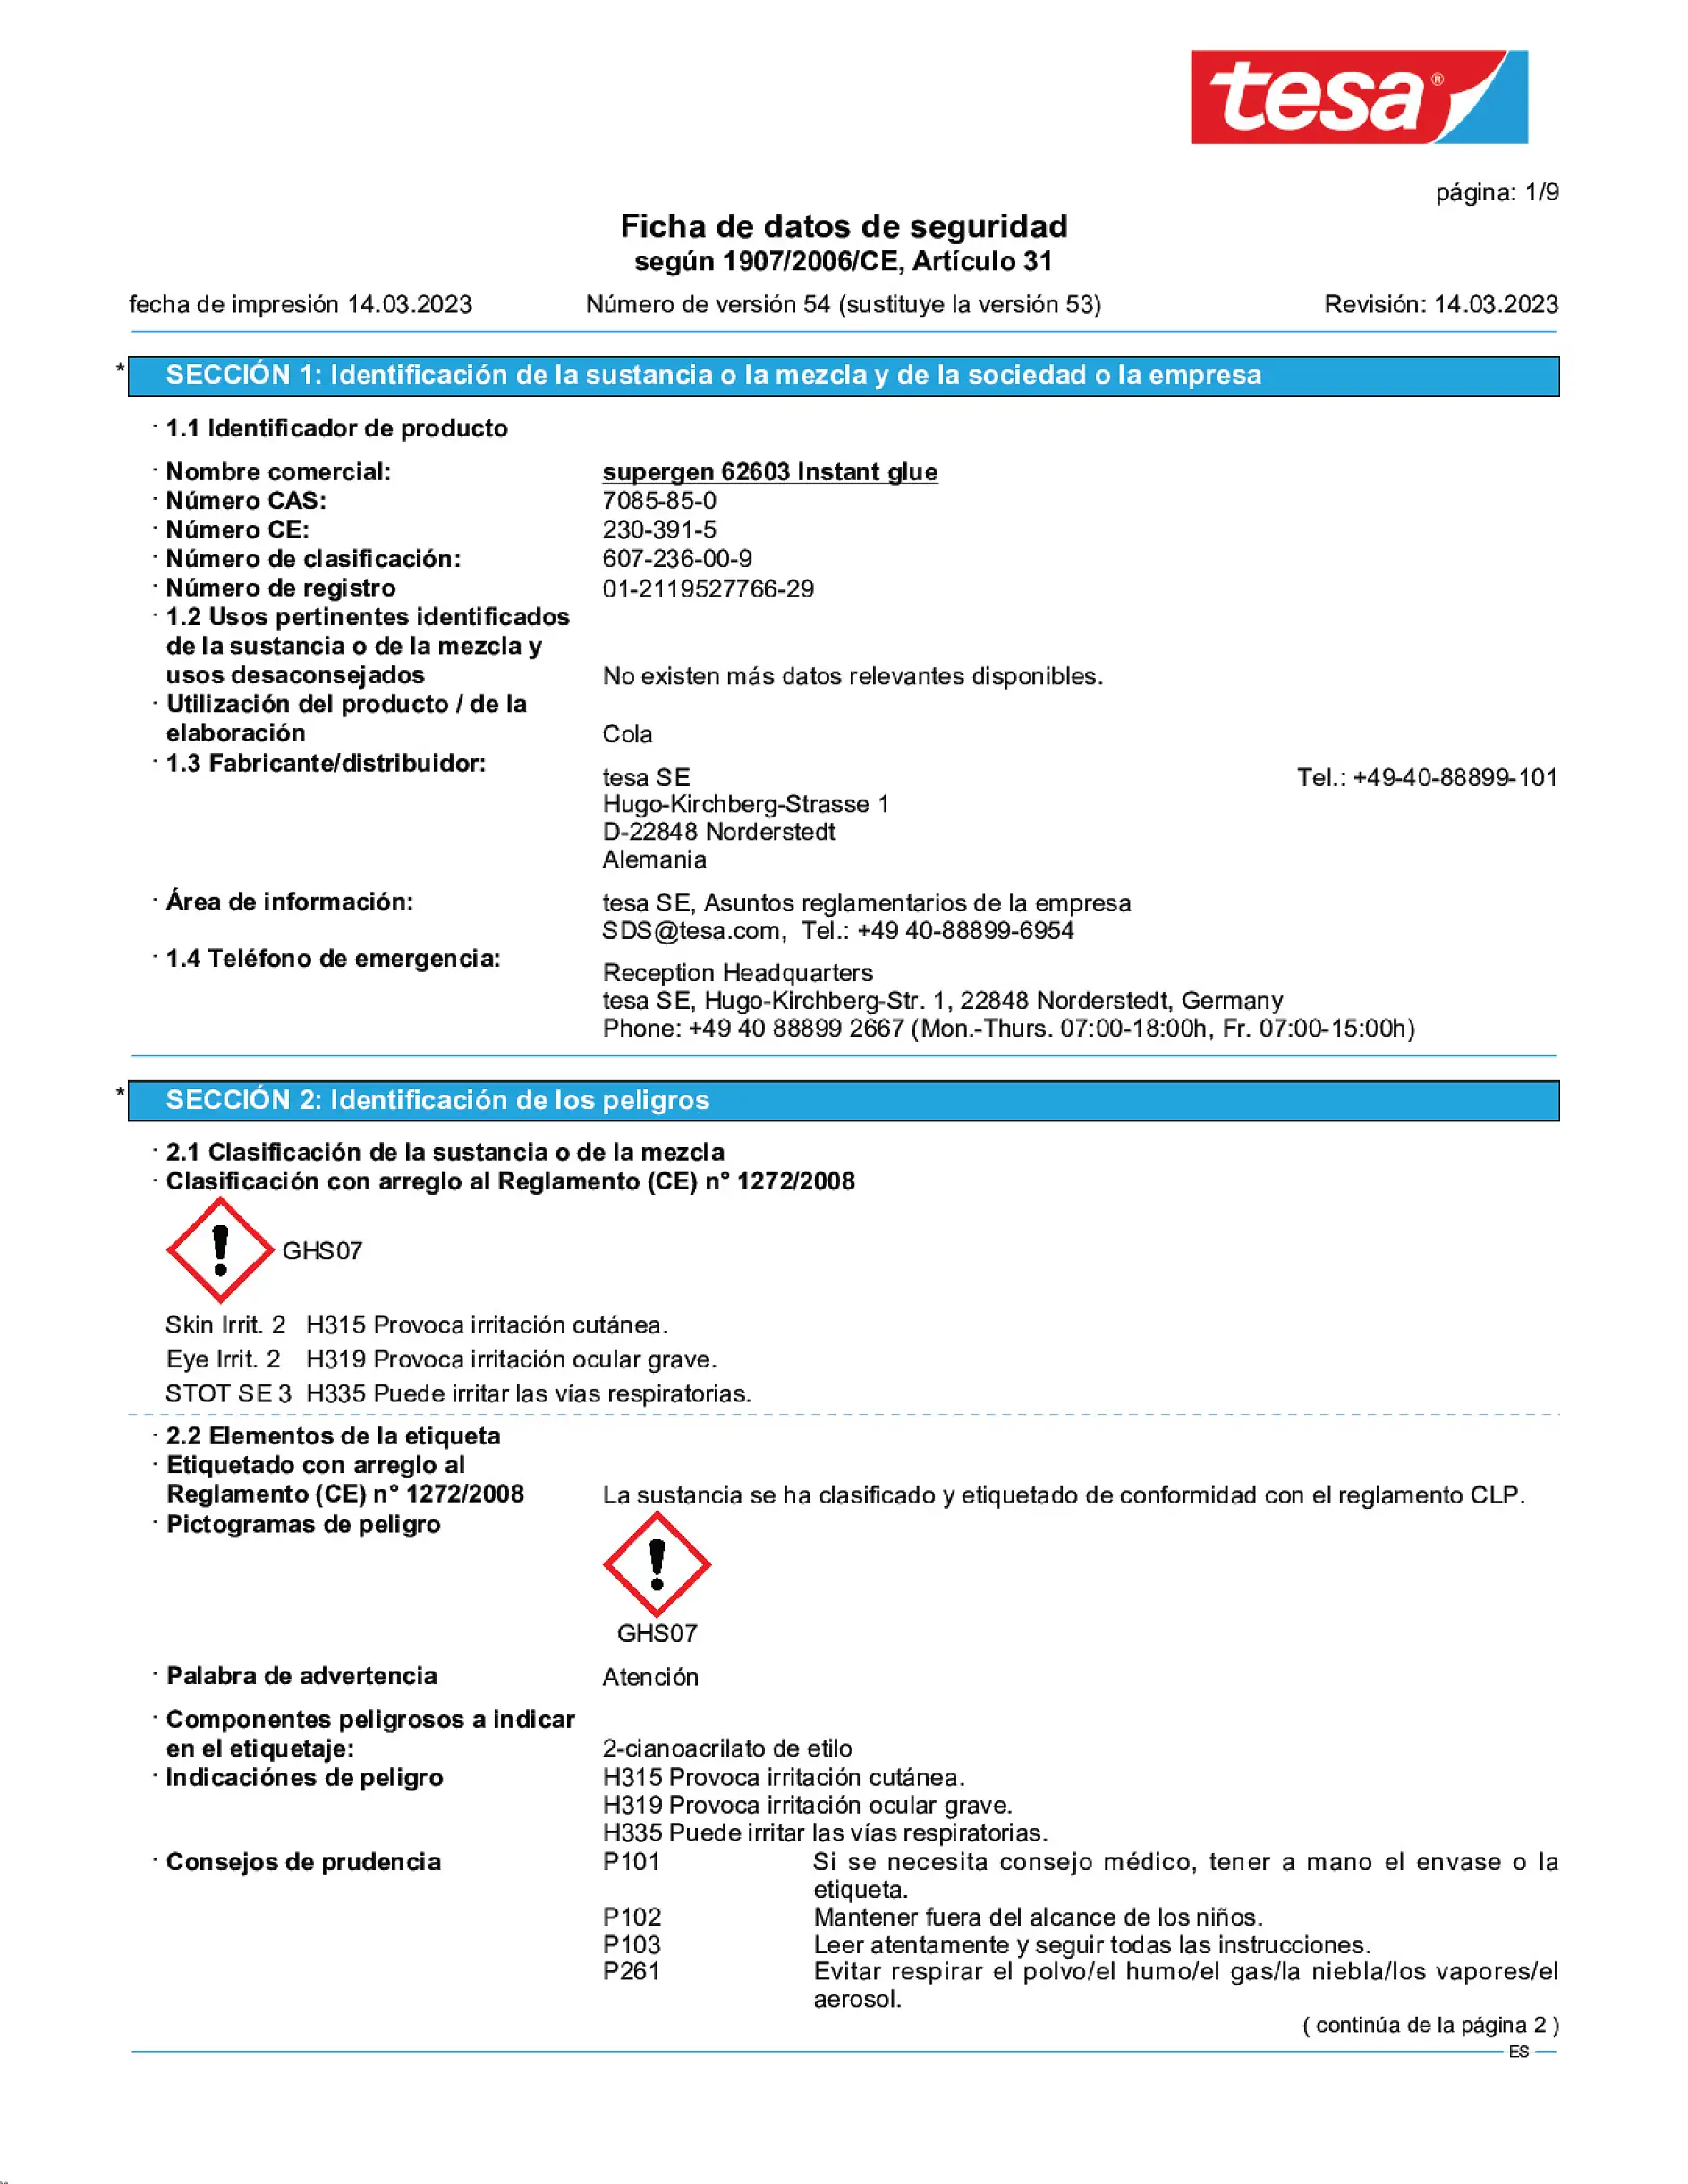 Safety data sheet_Supergen® 62603_es-ES_v54